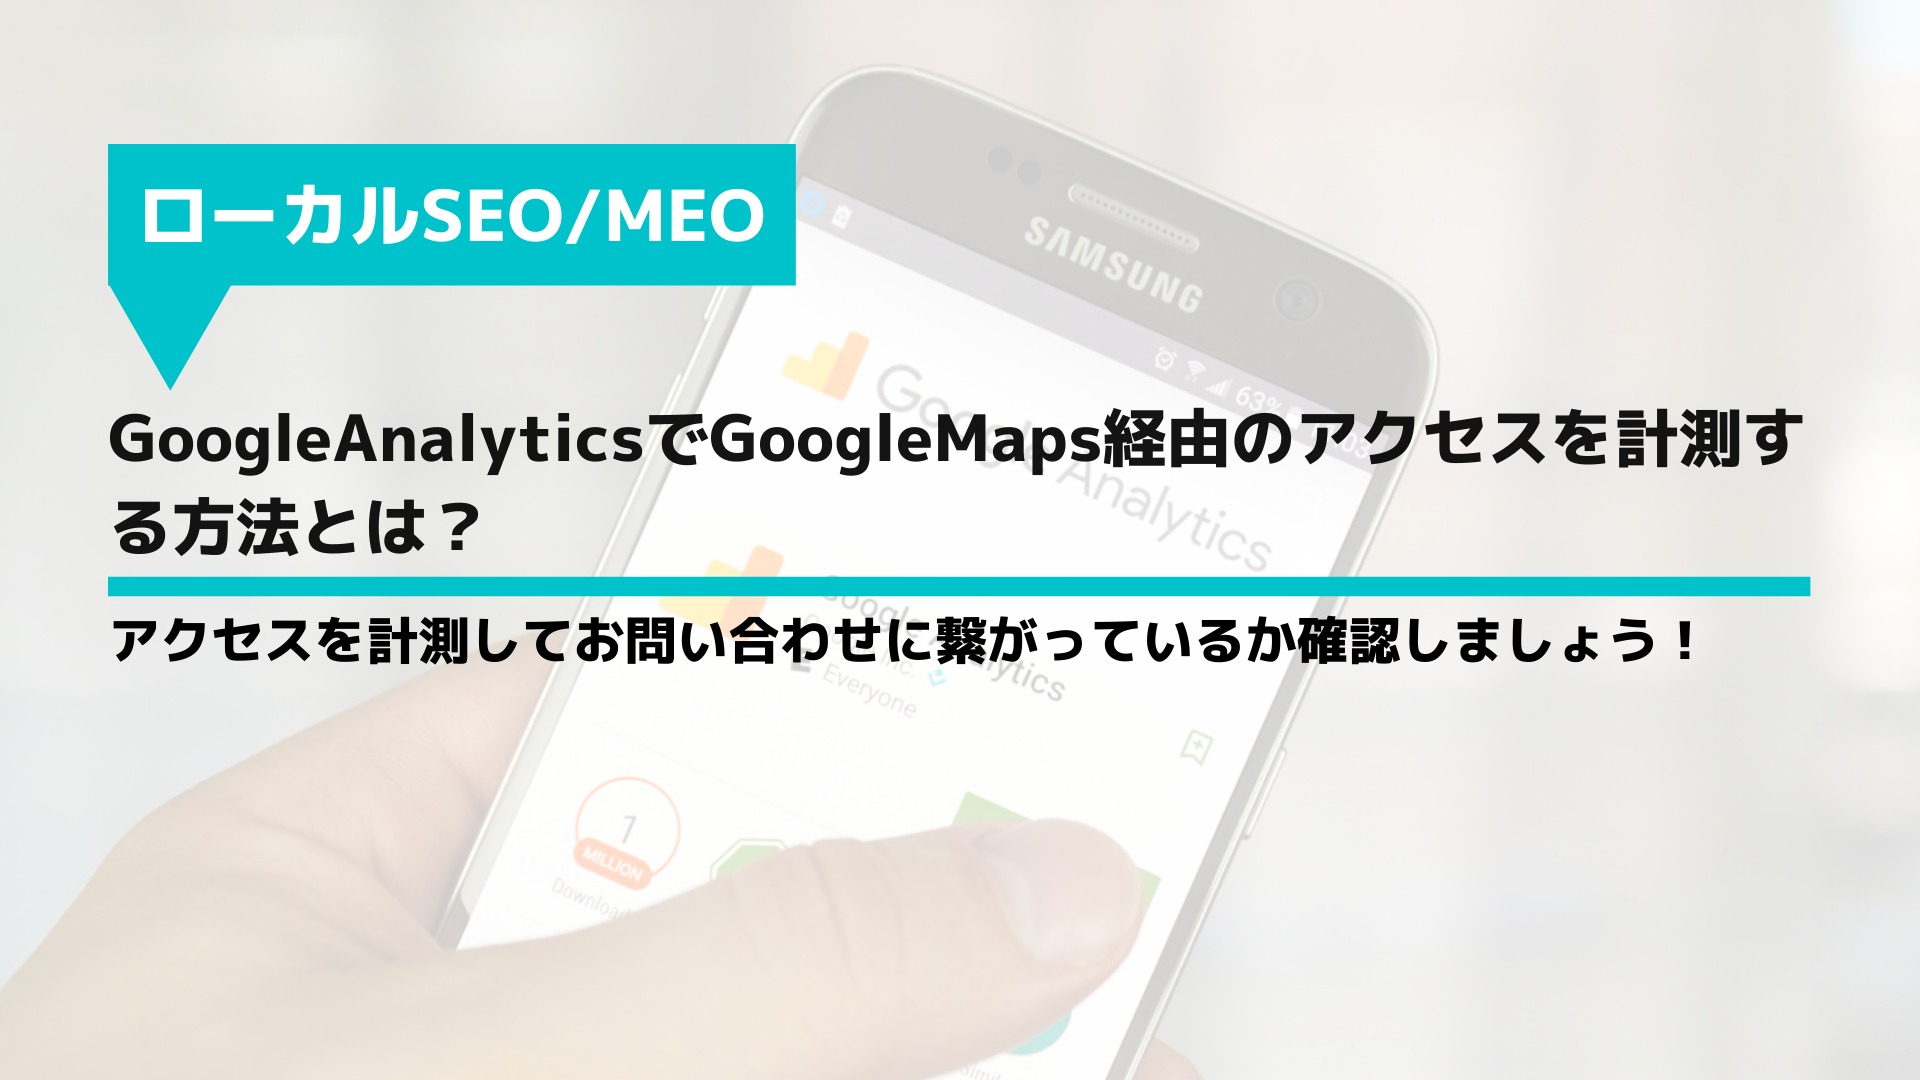 Google AnalyticsでGoogle Maps経由のアクセスを計測する方法とは？